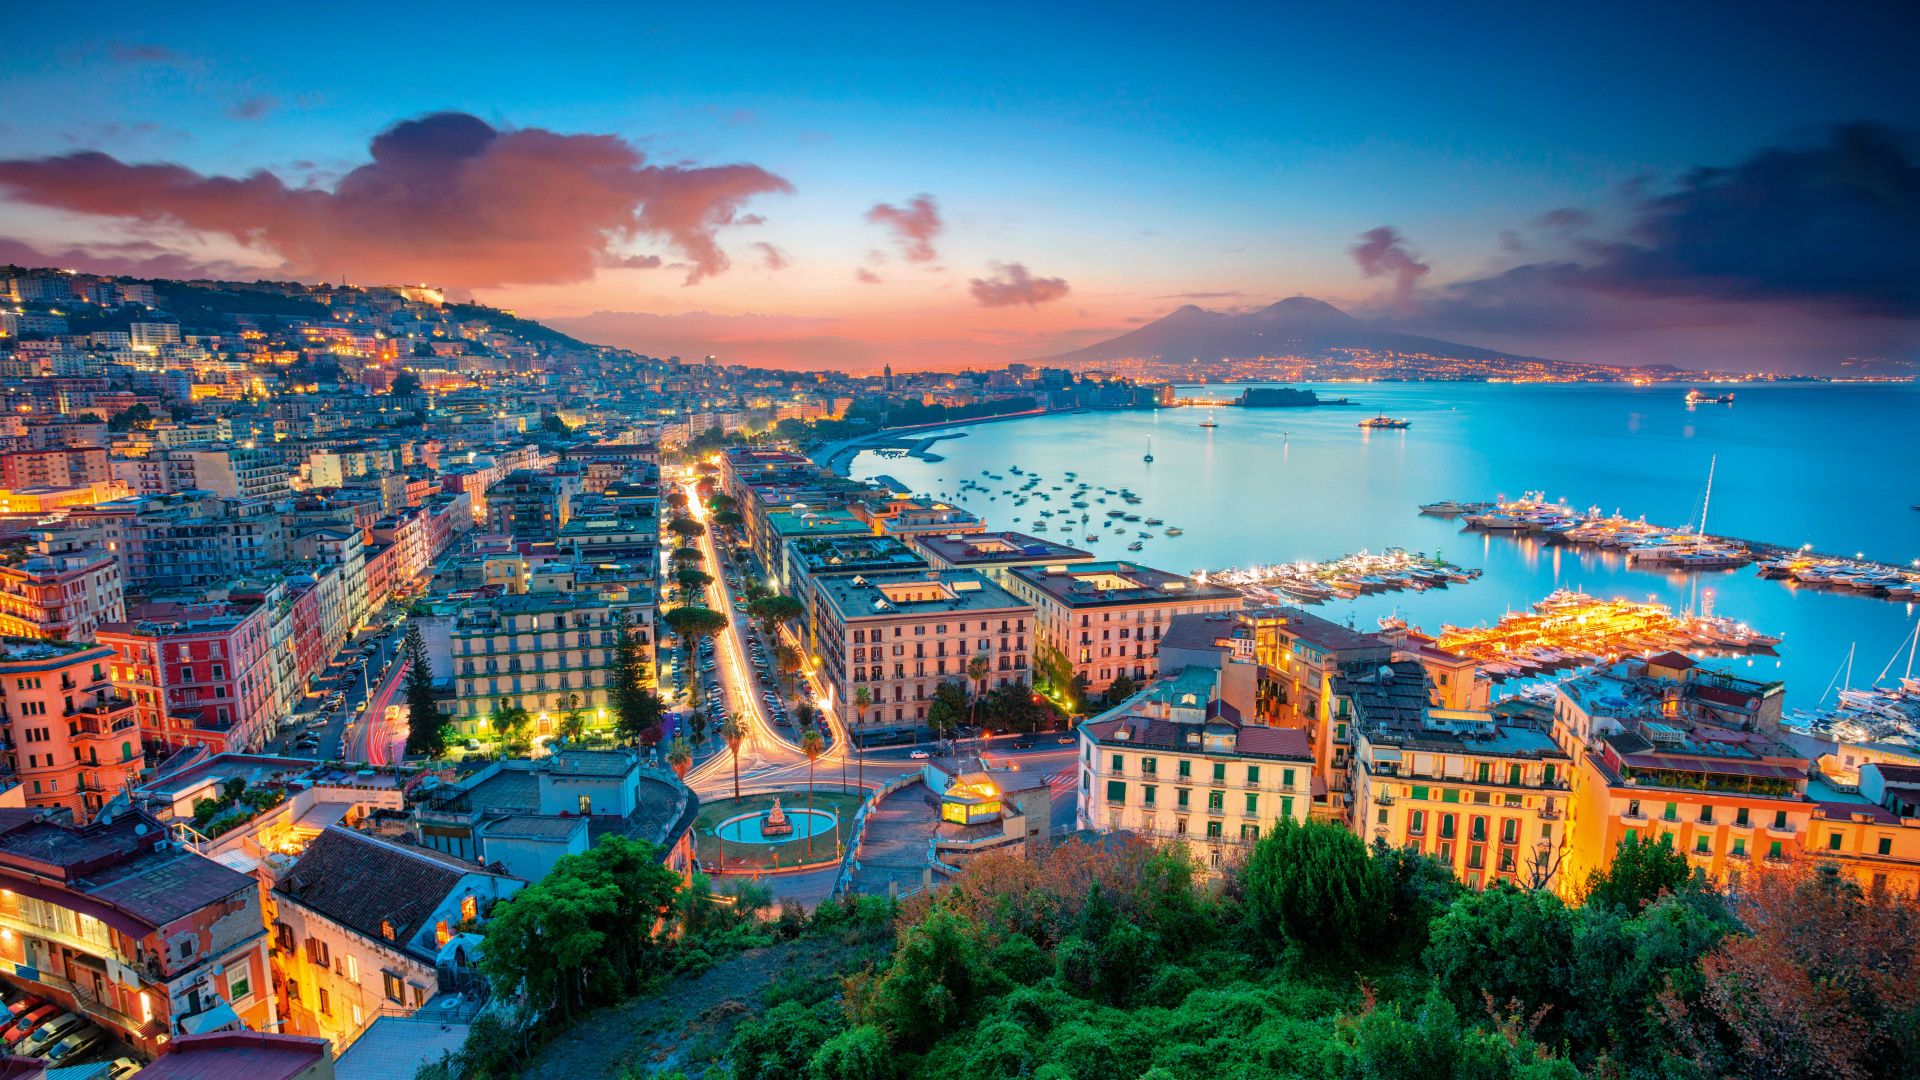 Napoli Night / Naples, Italy. Aerial Night Cityscape With Skyline, Car